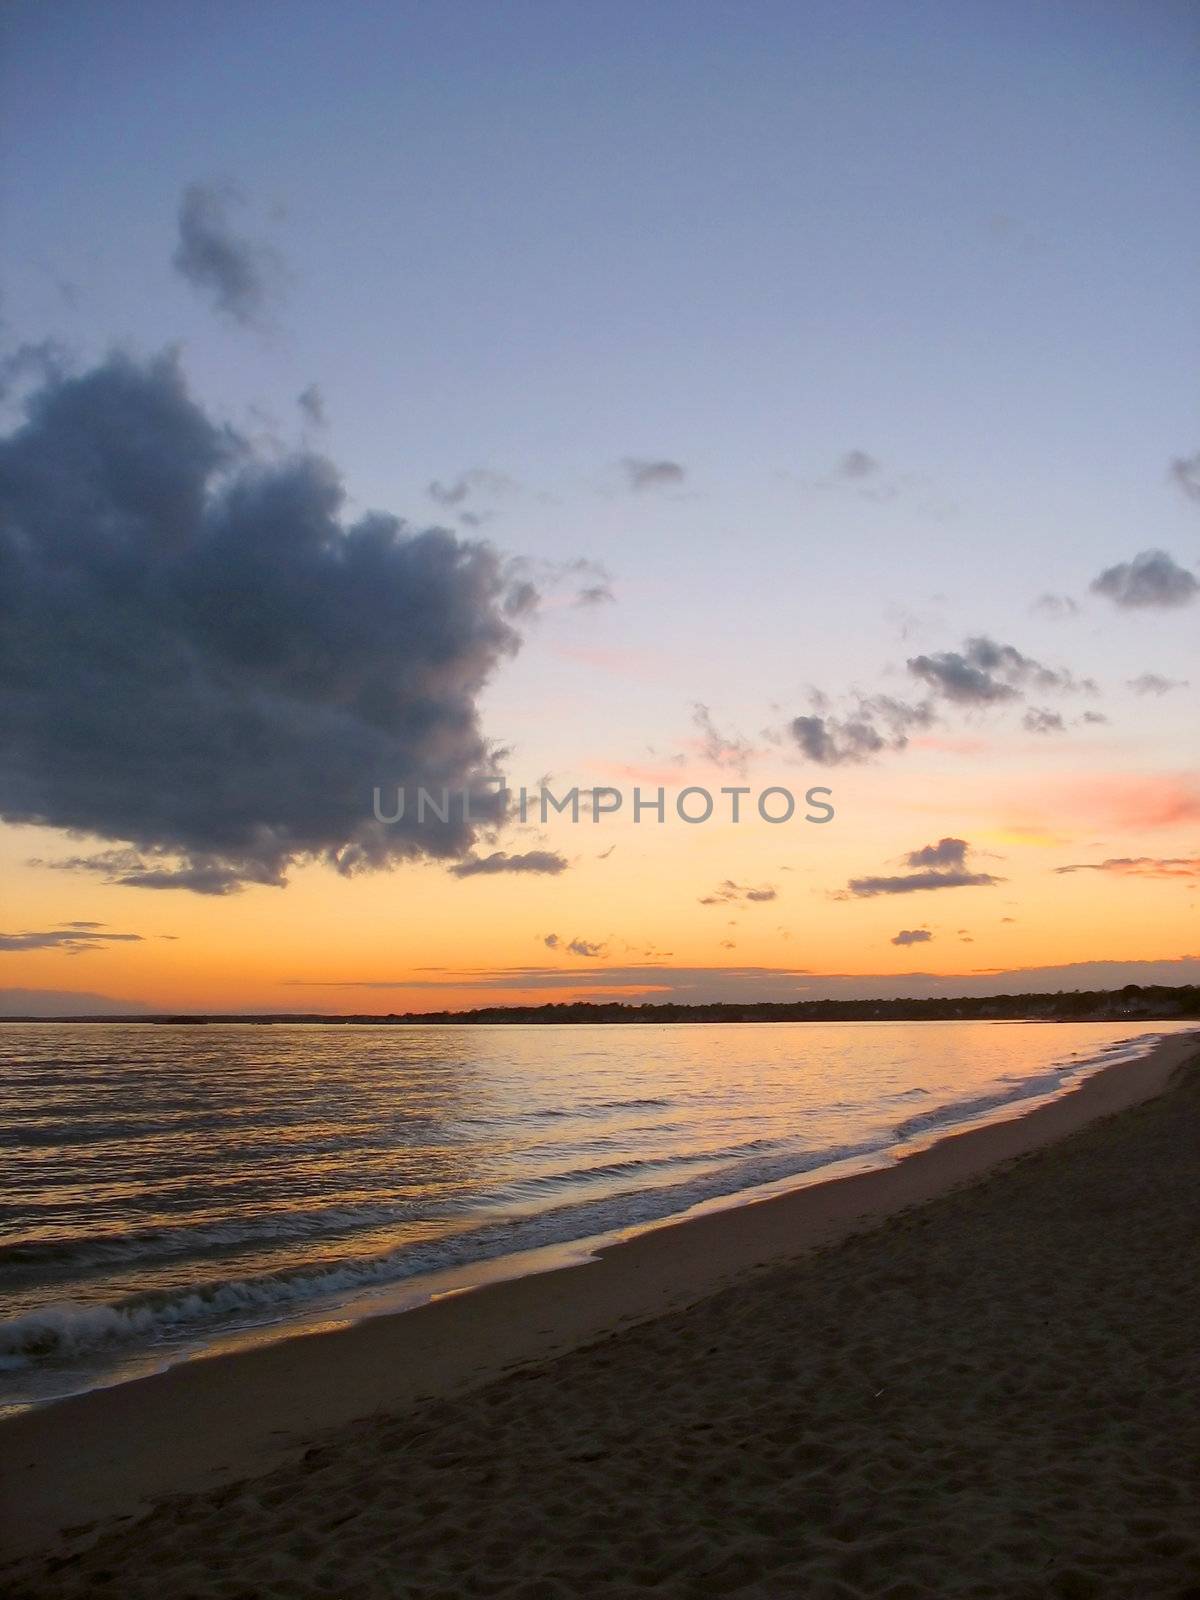 A pretty sunset at a New England beach - Connecticut, USA